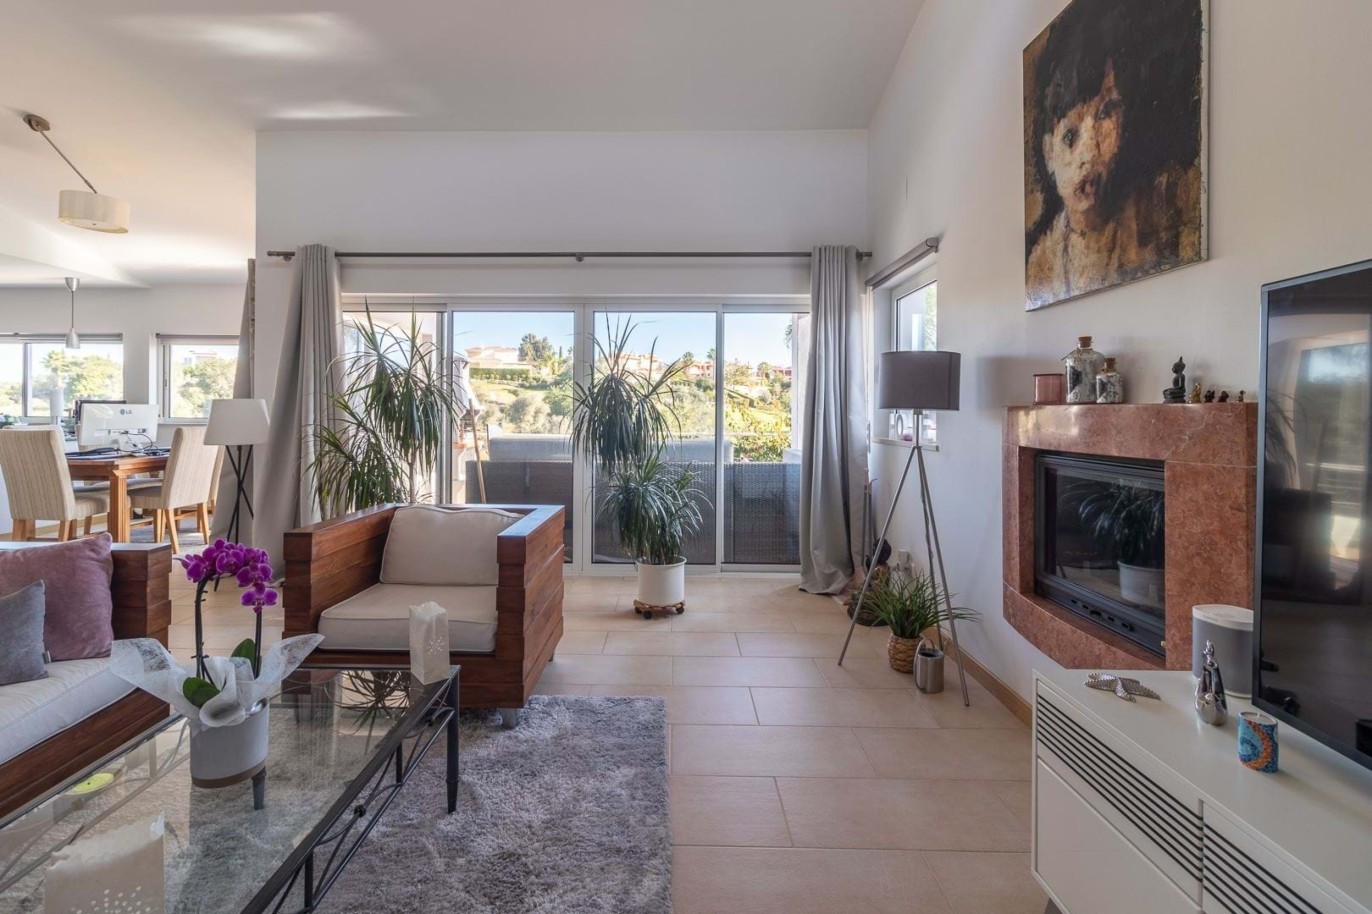 3 Bedroom Villa with swimming pool, for sale in Carvoeiro, Algarve_215297